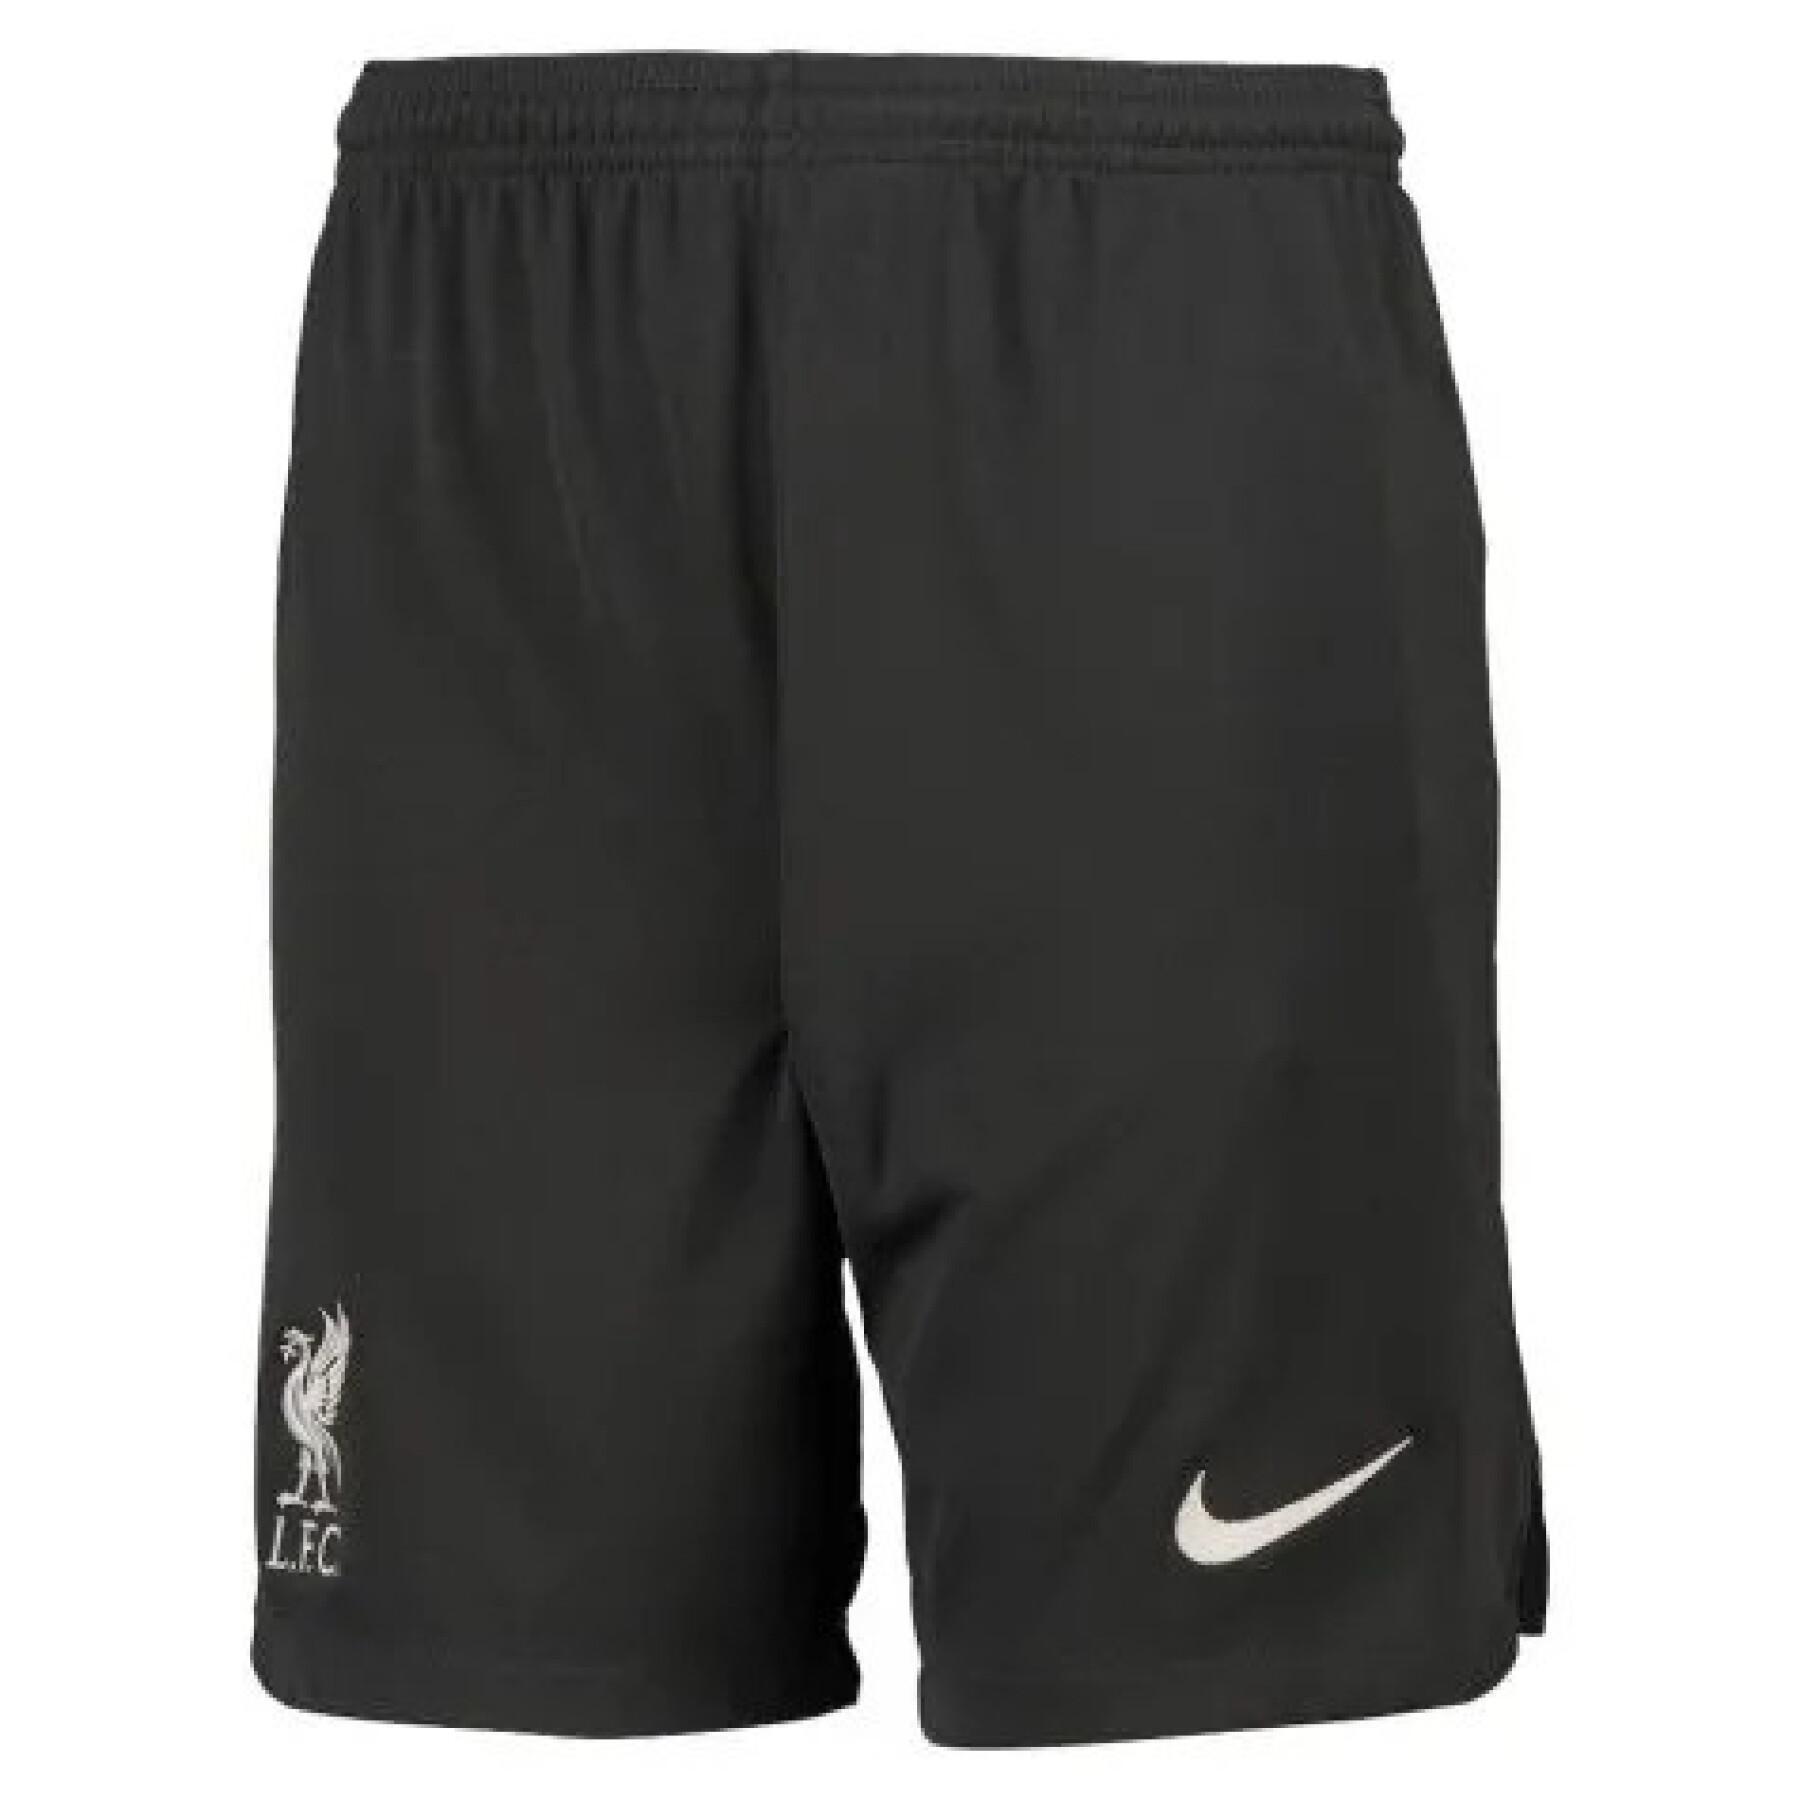 Goalkeeper shorts for children Liverpool FC 2022/23